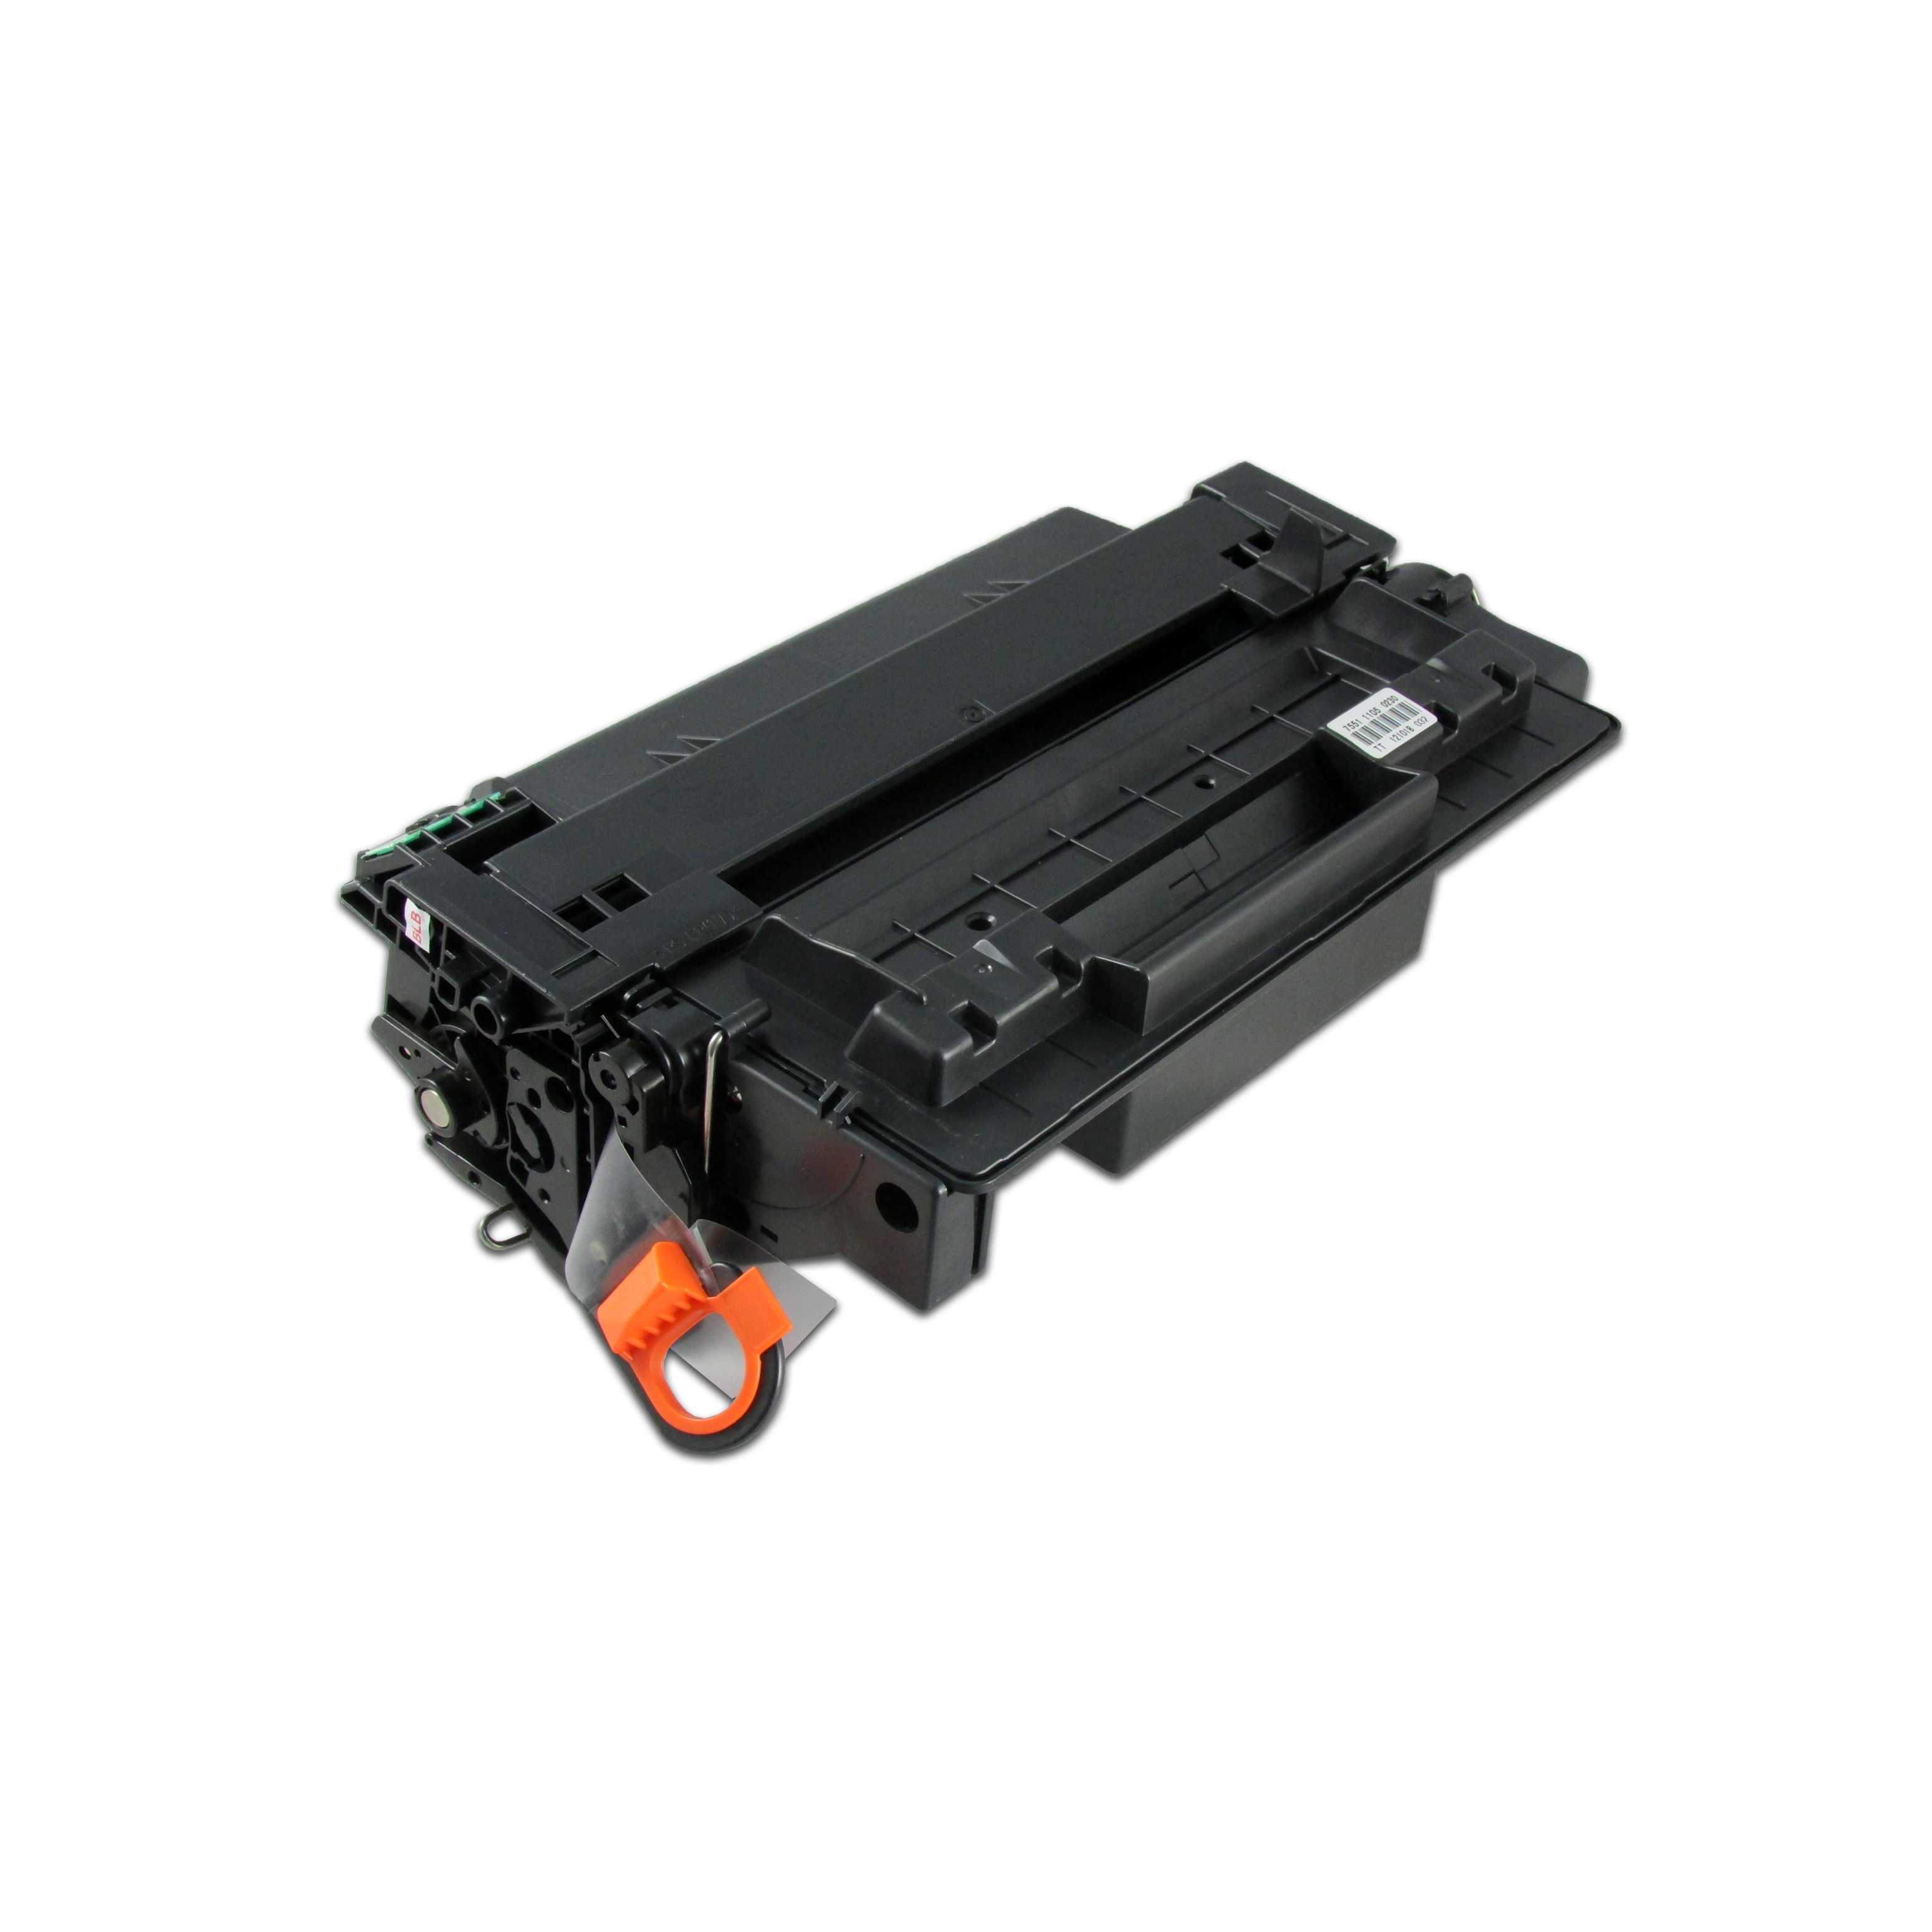 Q7551A toner cartridge Use For P3005/P3005D/P3005N